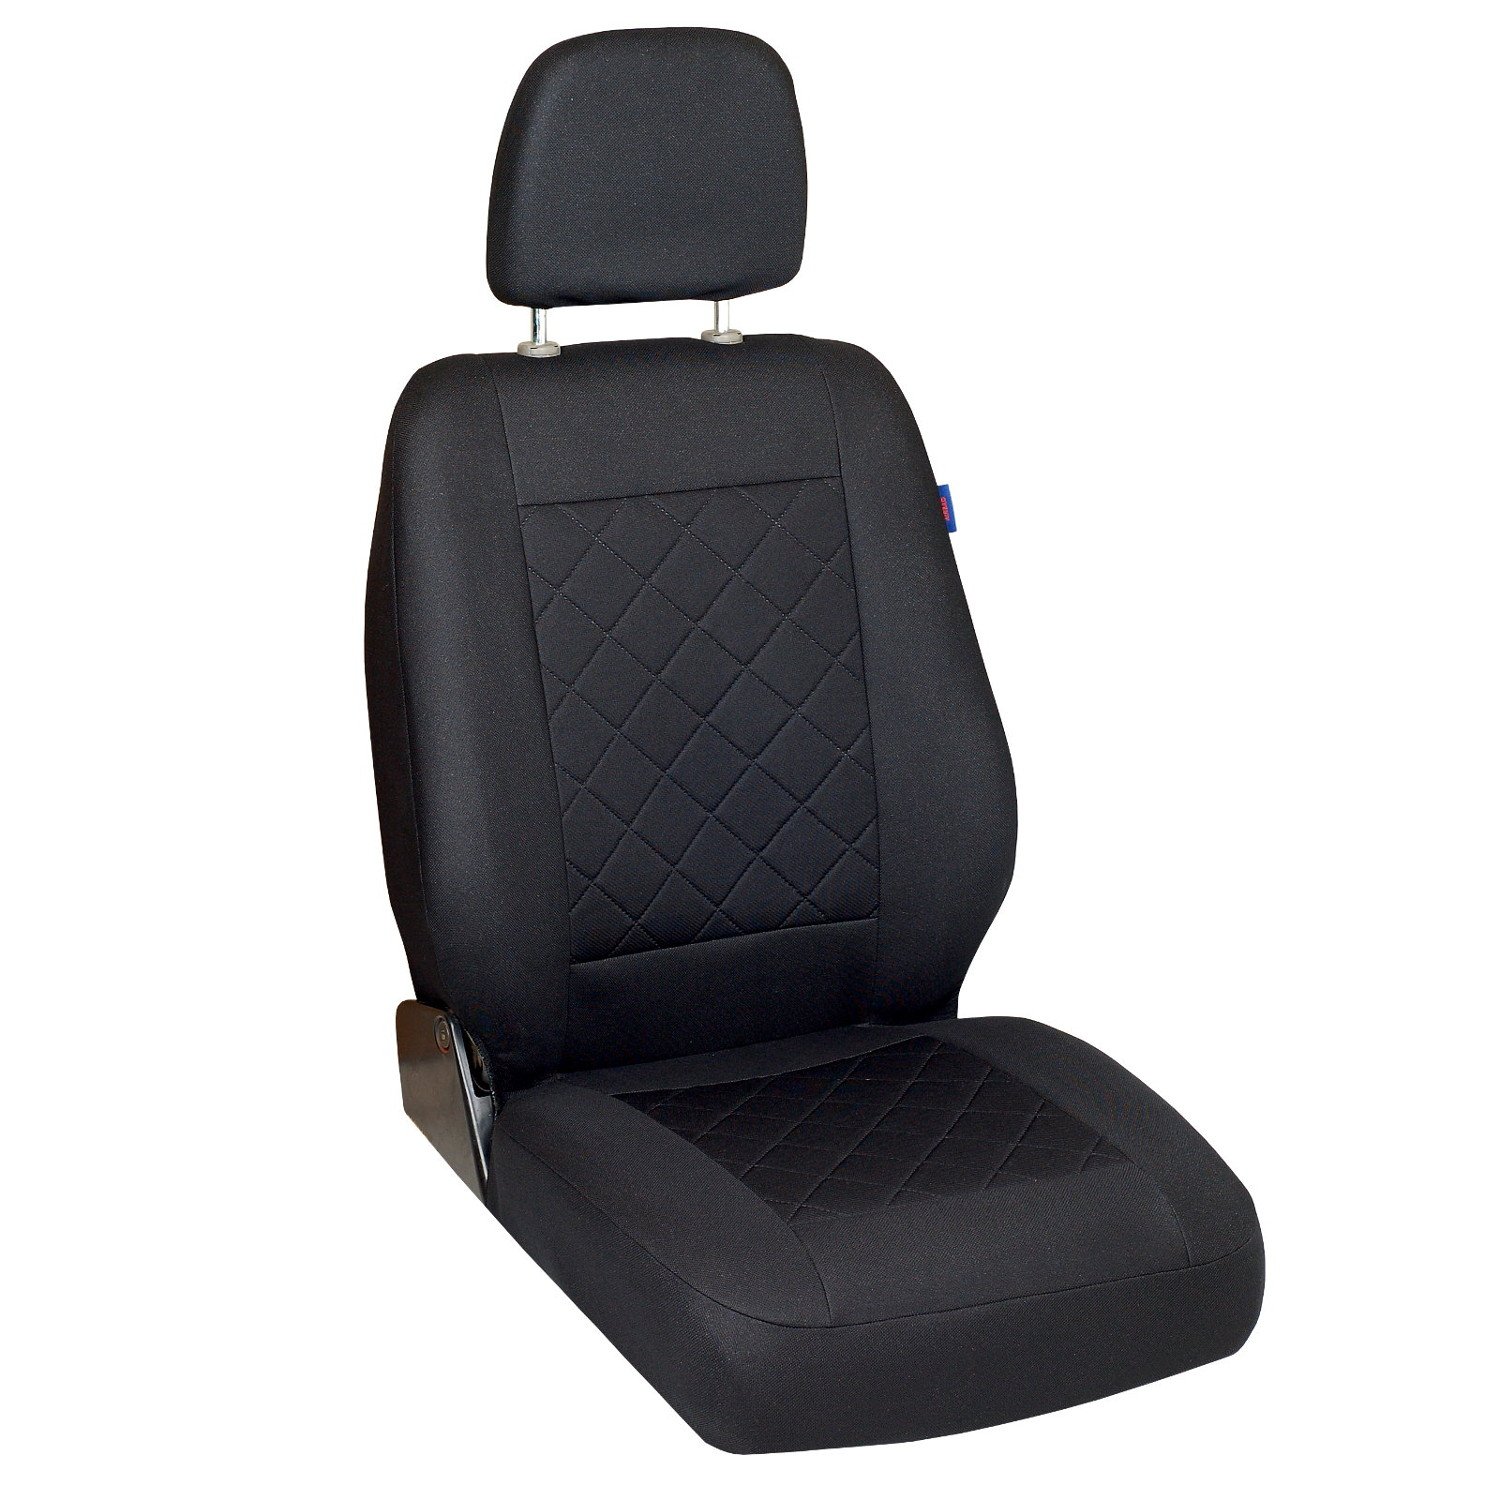 Jumper Sitzbezug - Fahrersitz - Farbe Premium Schwarz gepresstes Karomuster